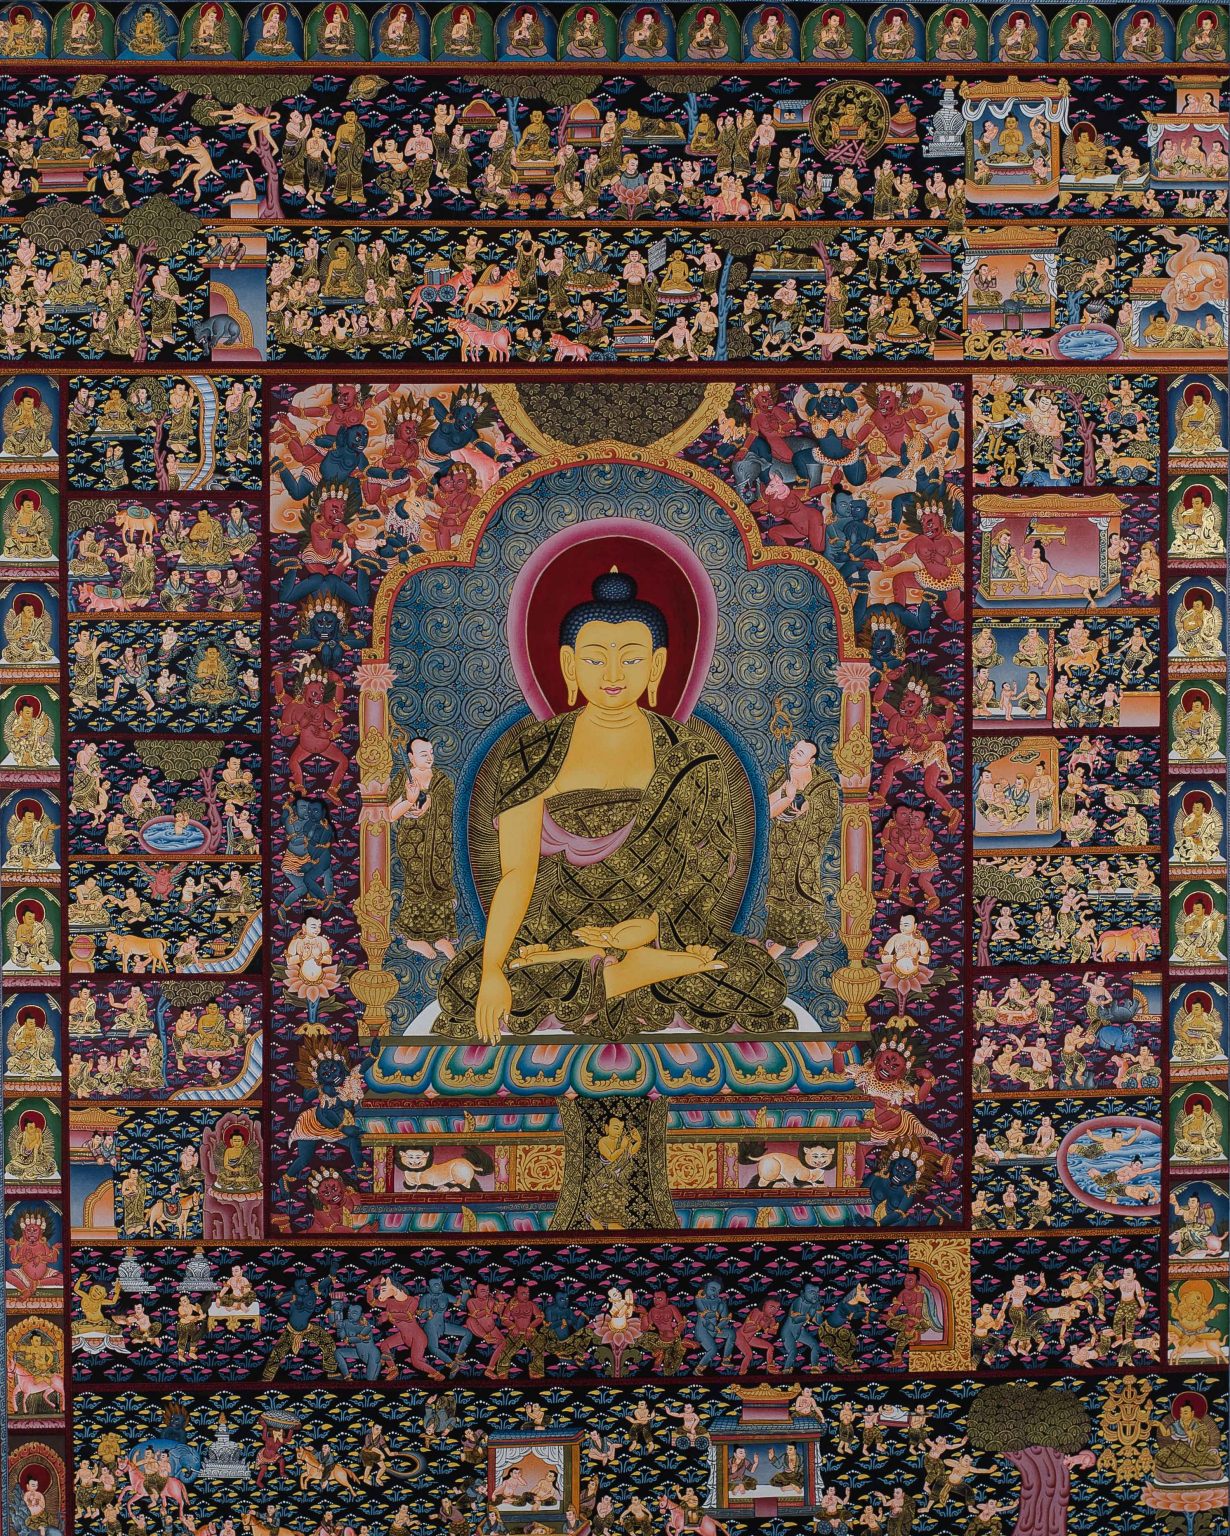 namo shakyamuni buddha meaning